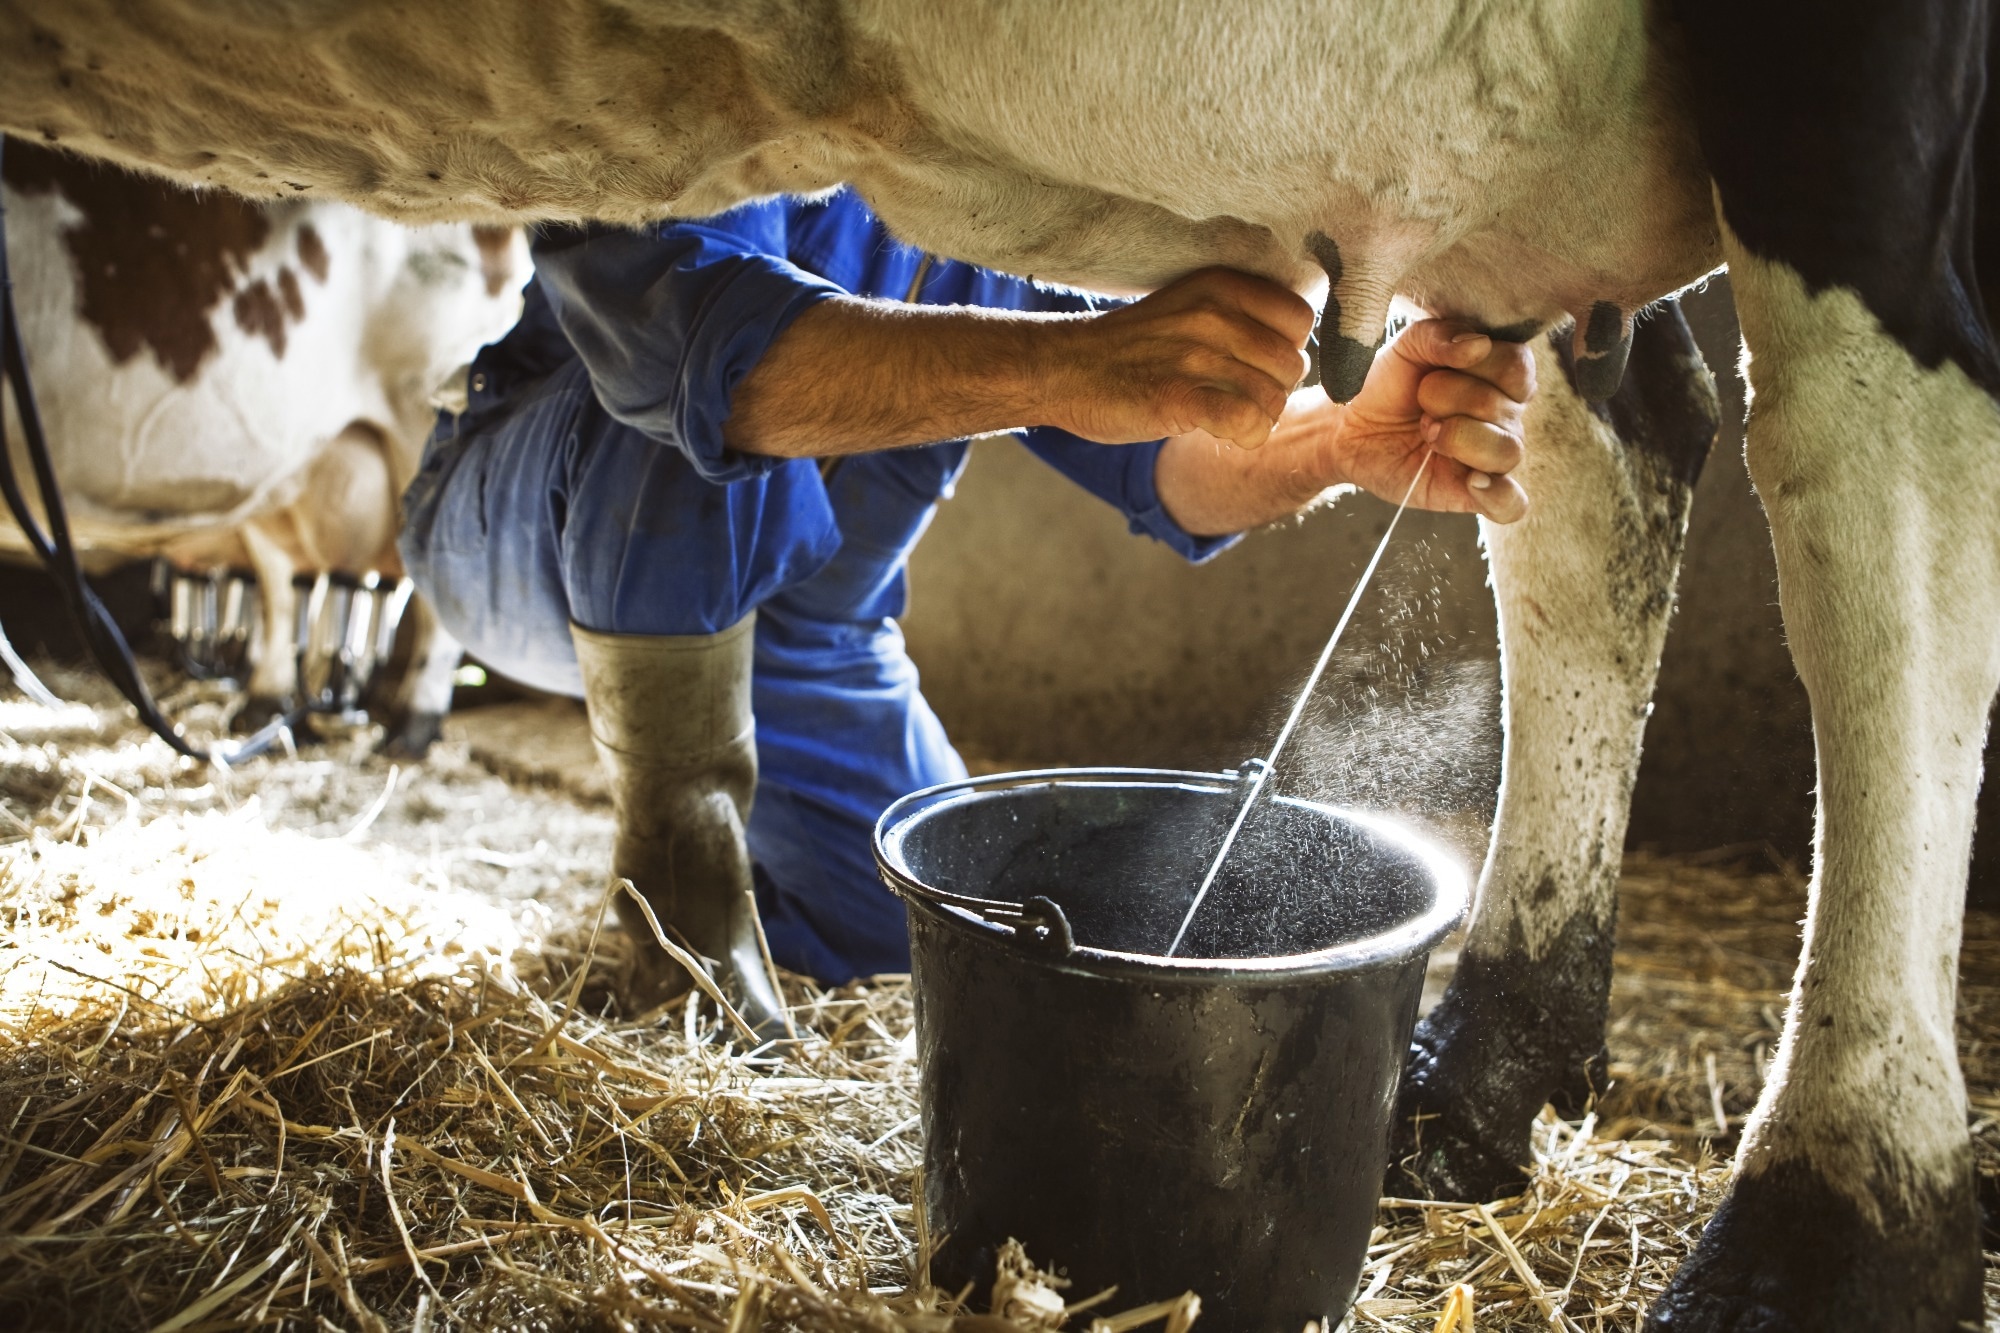 Study: Human proinsulin production in the milk of transgenic cattle. Image Credit: Zacchio/Shutterstock.com